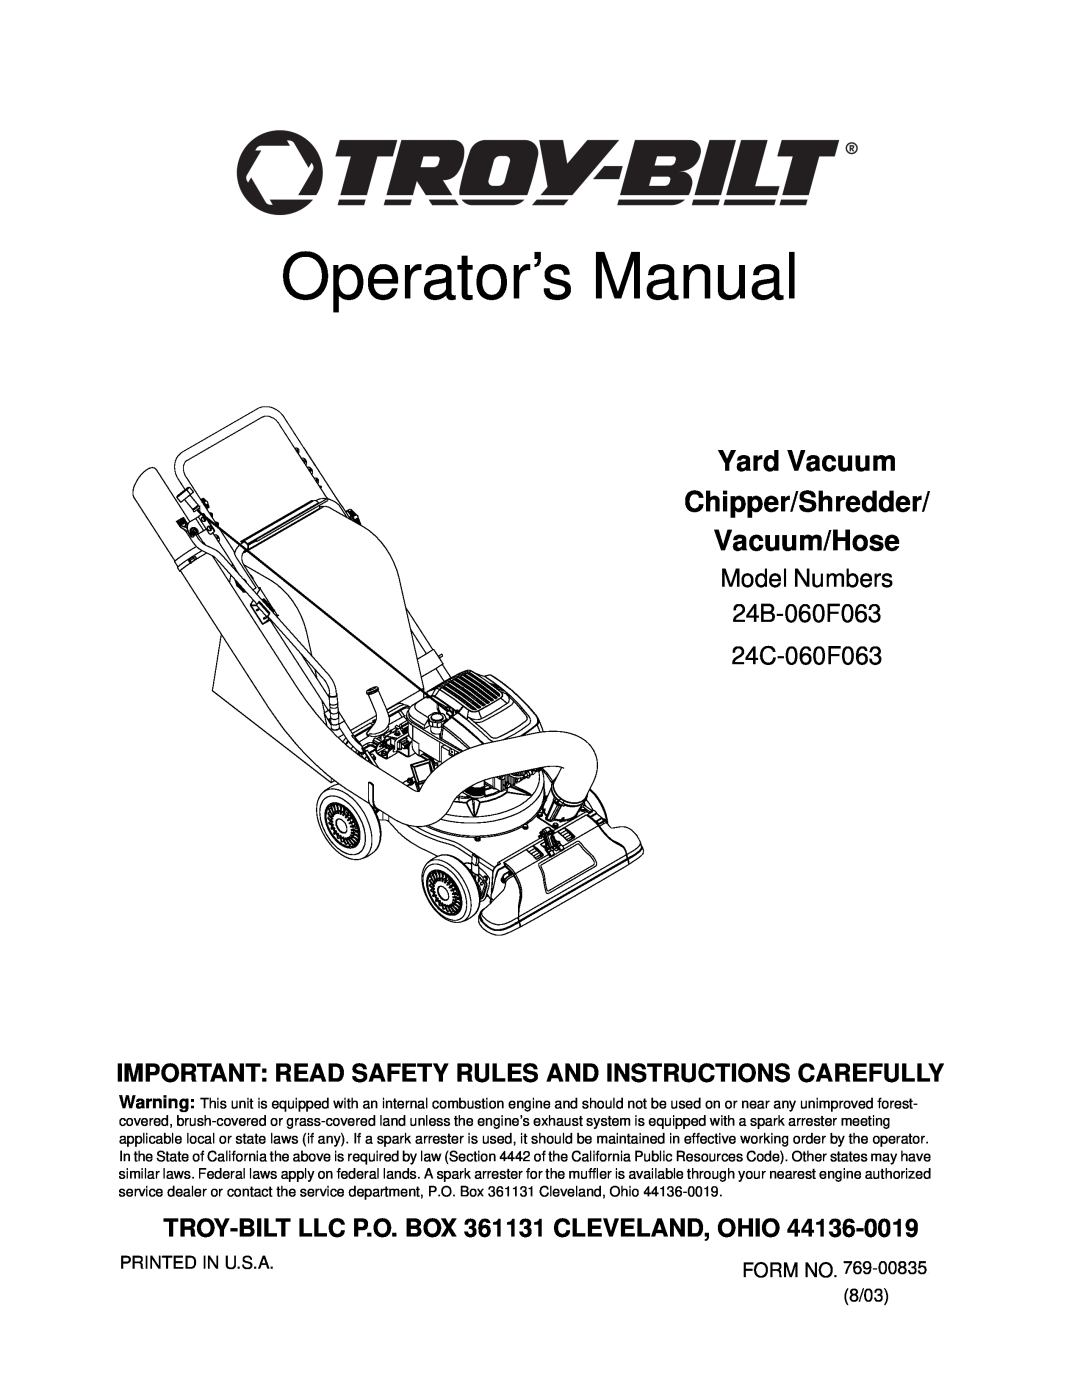 Troy-Bilt 24B-060F063, 24C-060F063 manual Yard Vacuum Chipper/Shredder Vacuum/Hose, Operator’s Manual 